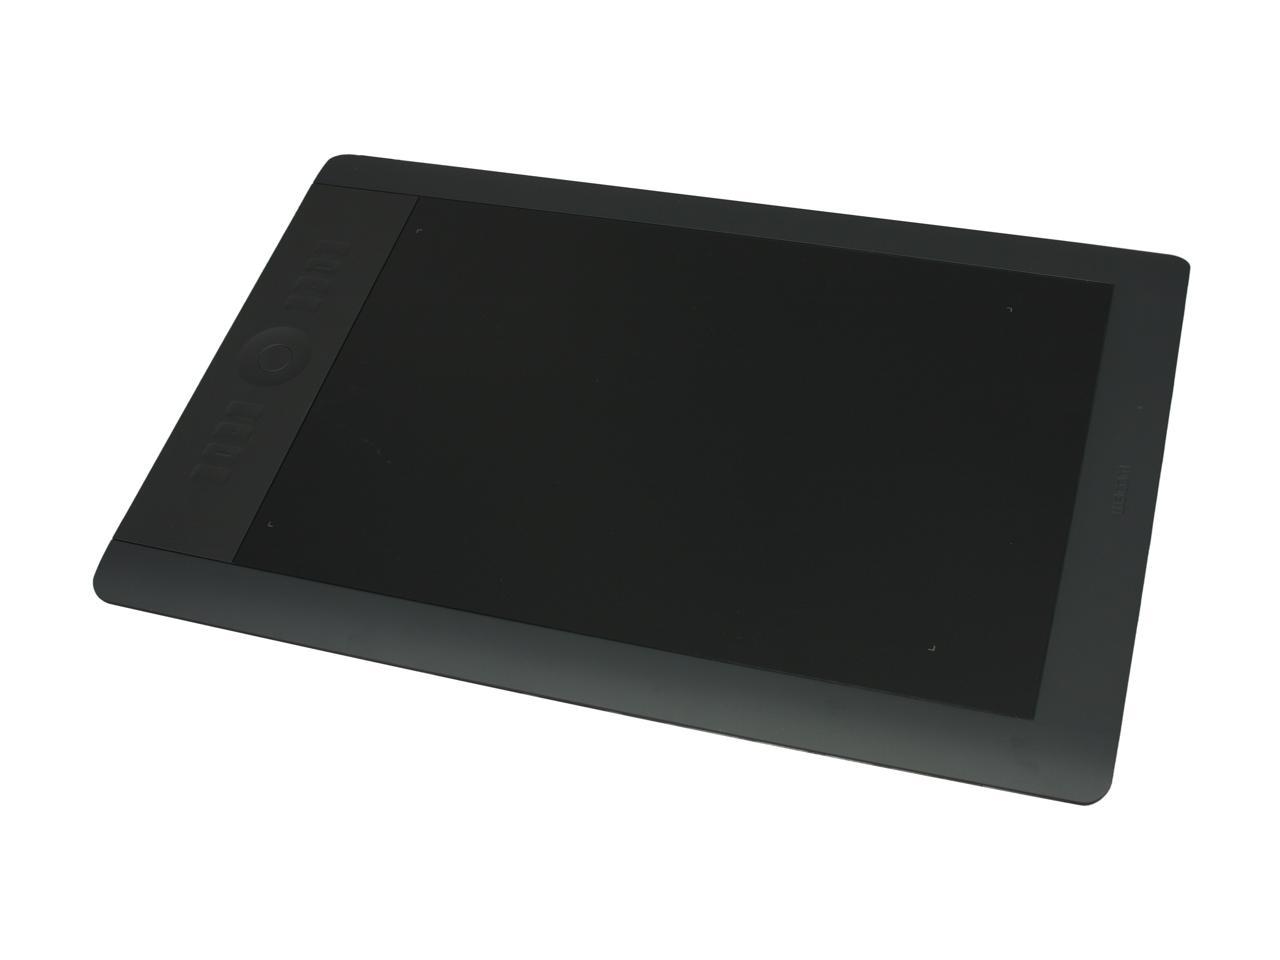 WACOM Intuos5 Touch PTH850 Large Pen Tablet - Newegg.com